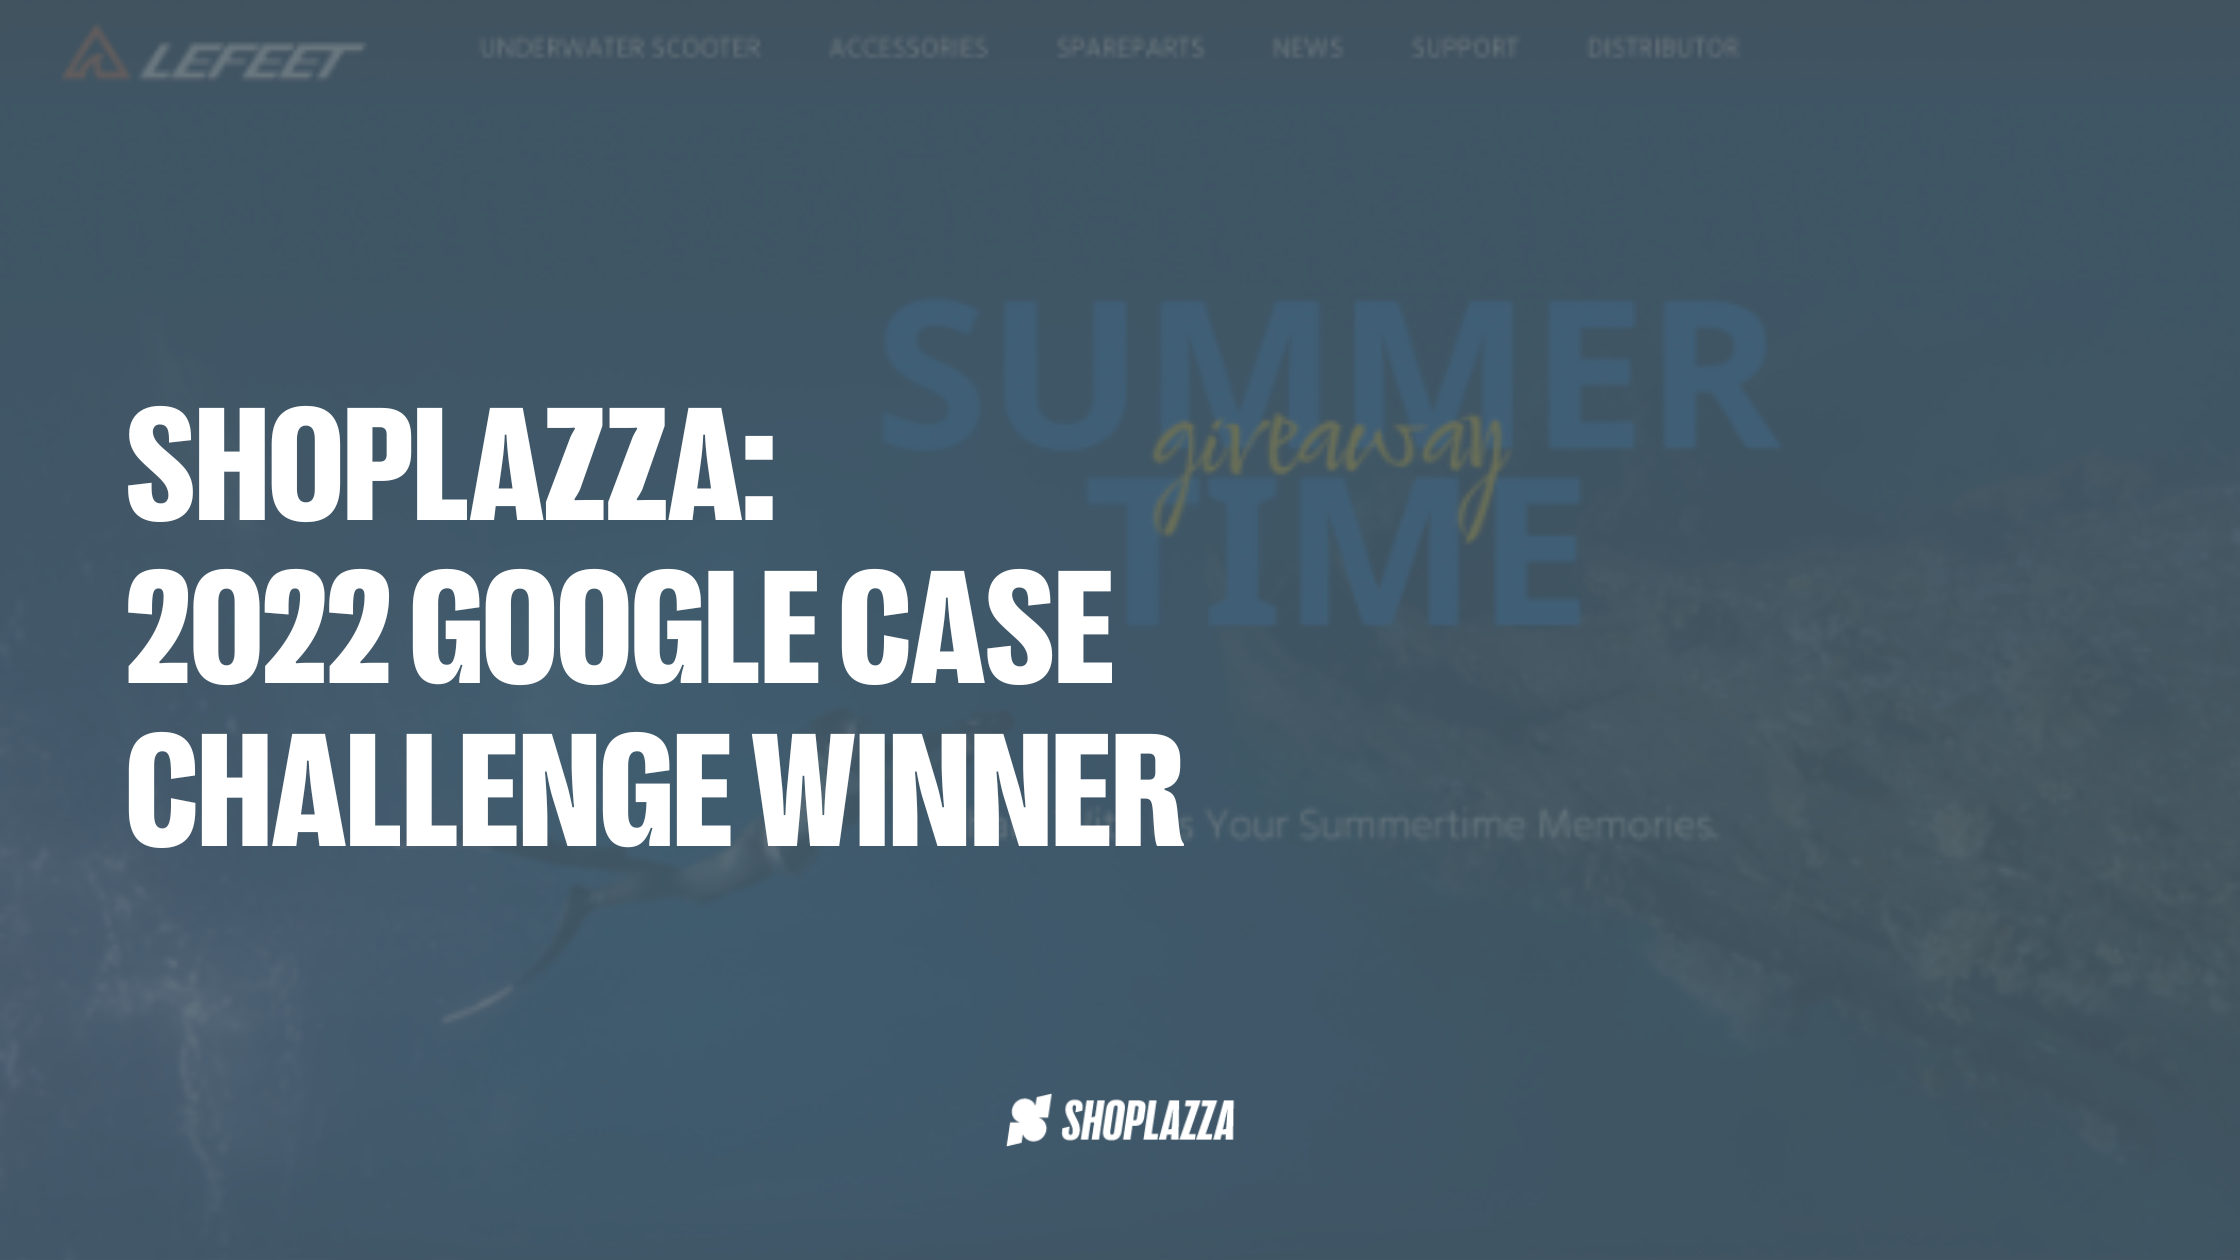 Shoplazza: Google Case Challenge Winner